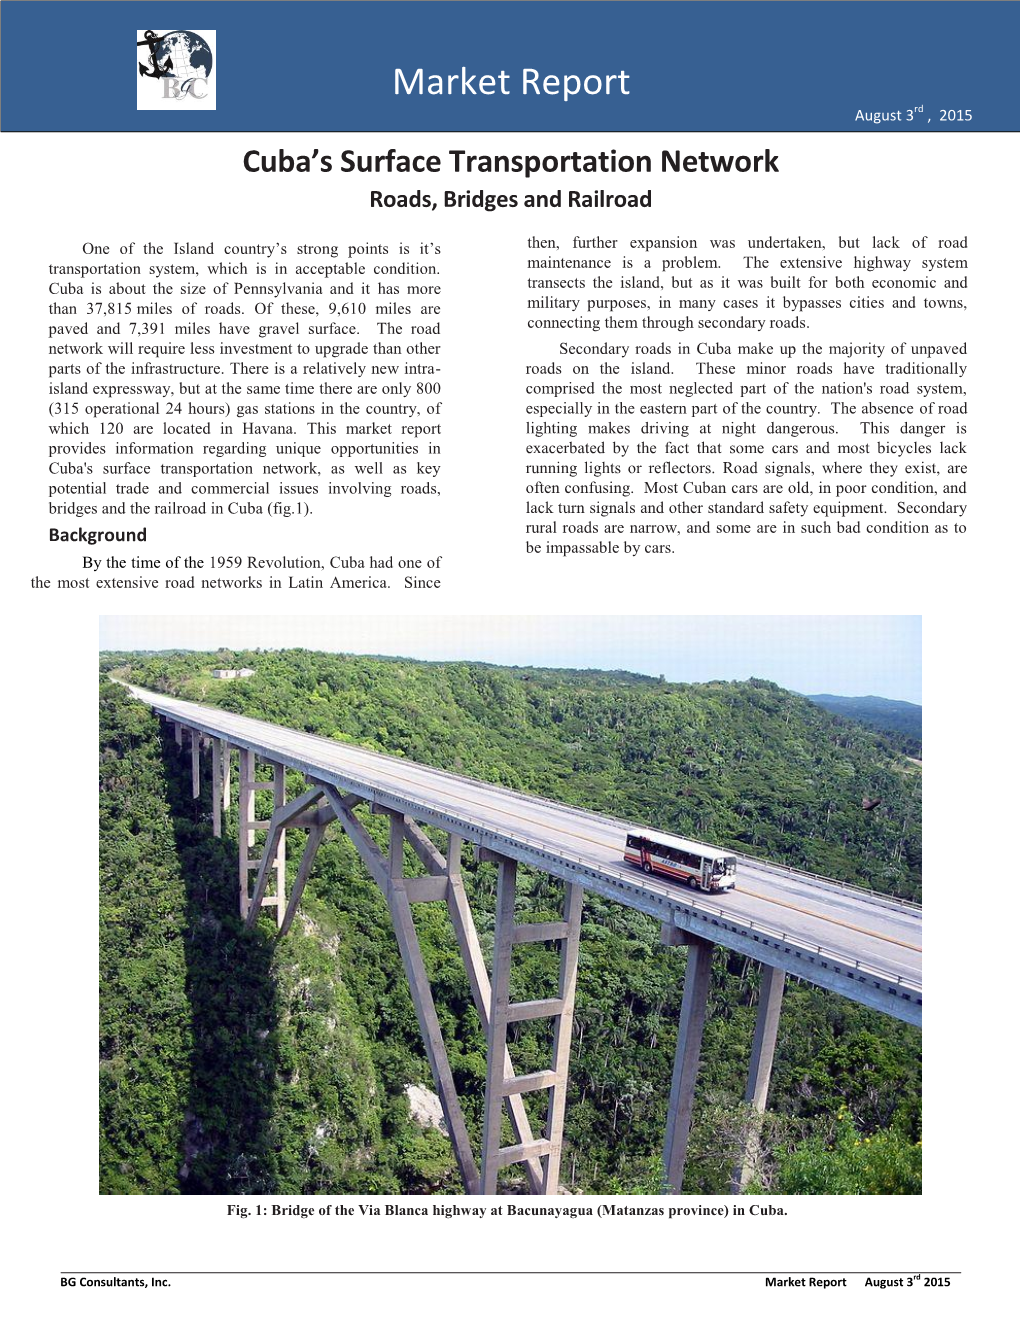 Cuba's Surface Transportation Network Roads, Bridges And